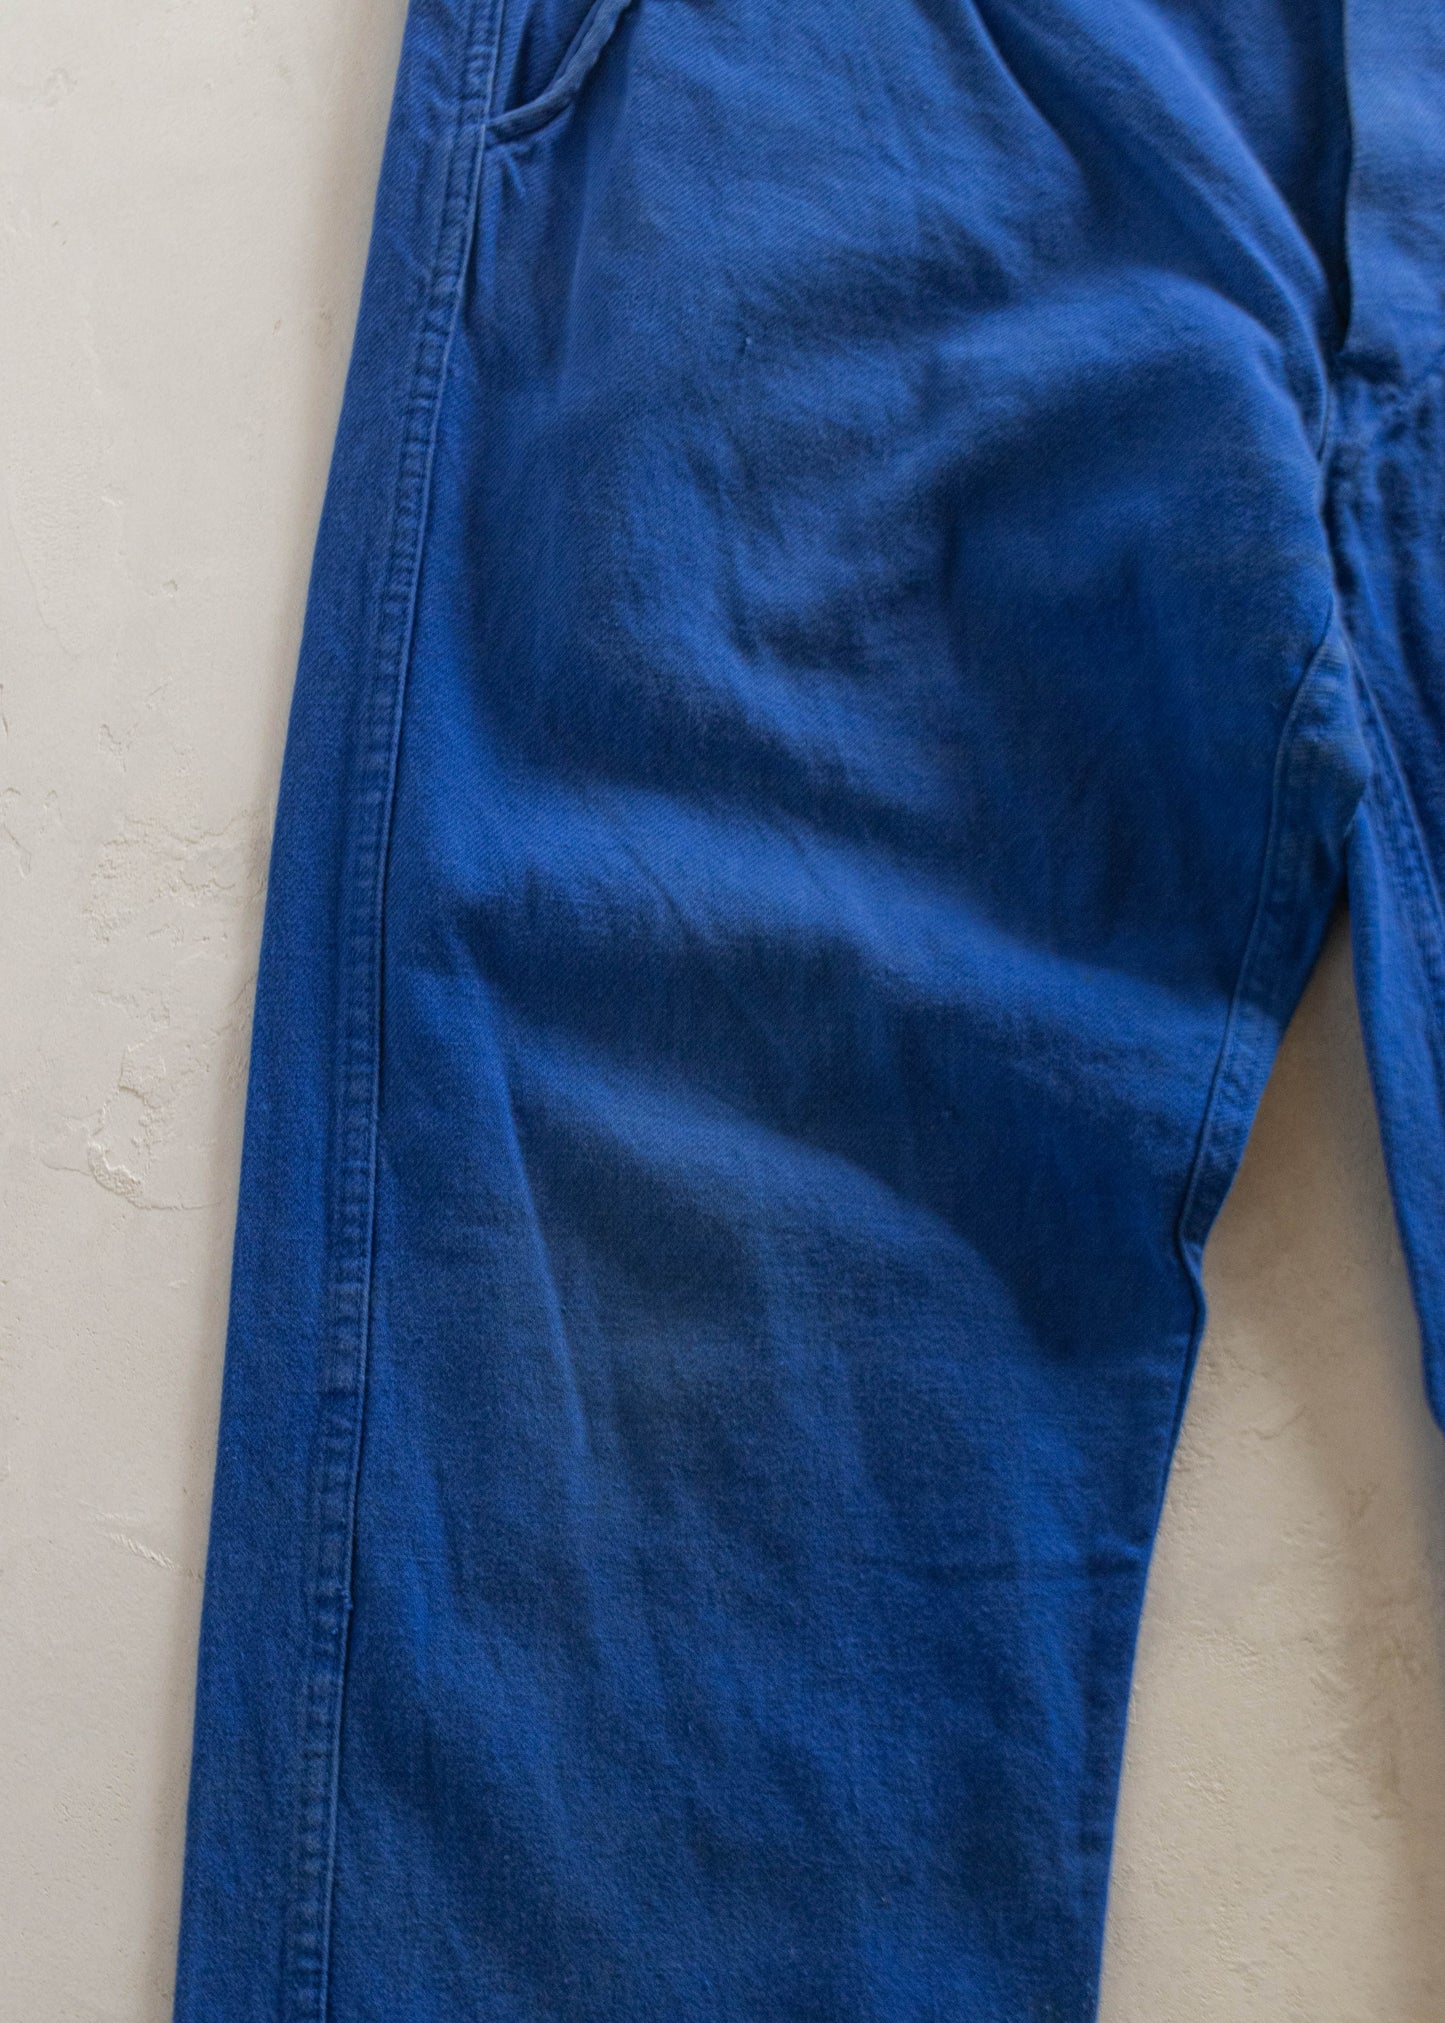 1980s French Workwear Chore Pants Size Women's 33 Men's 36